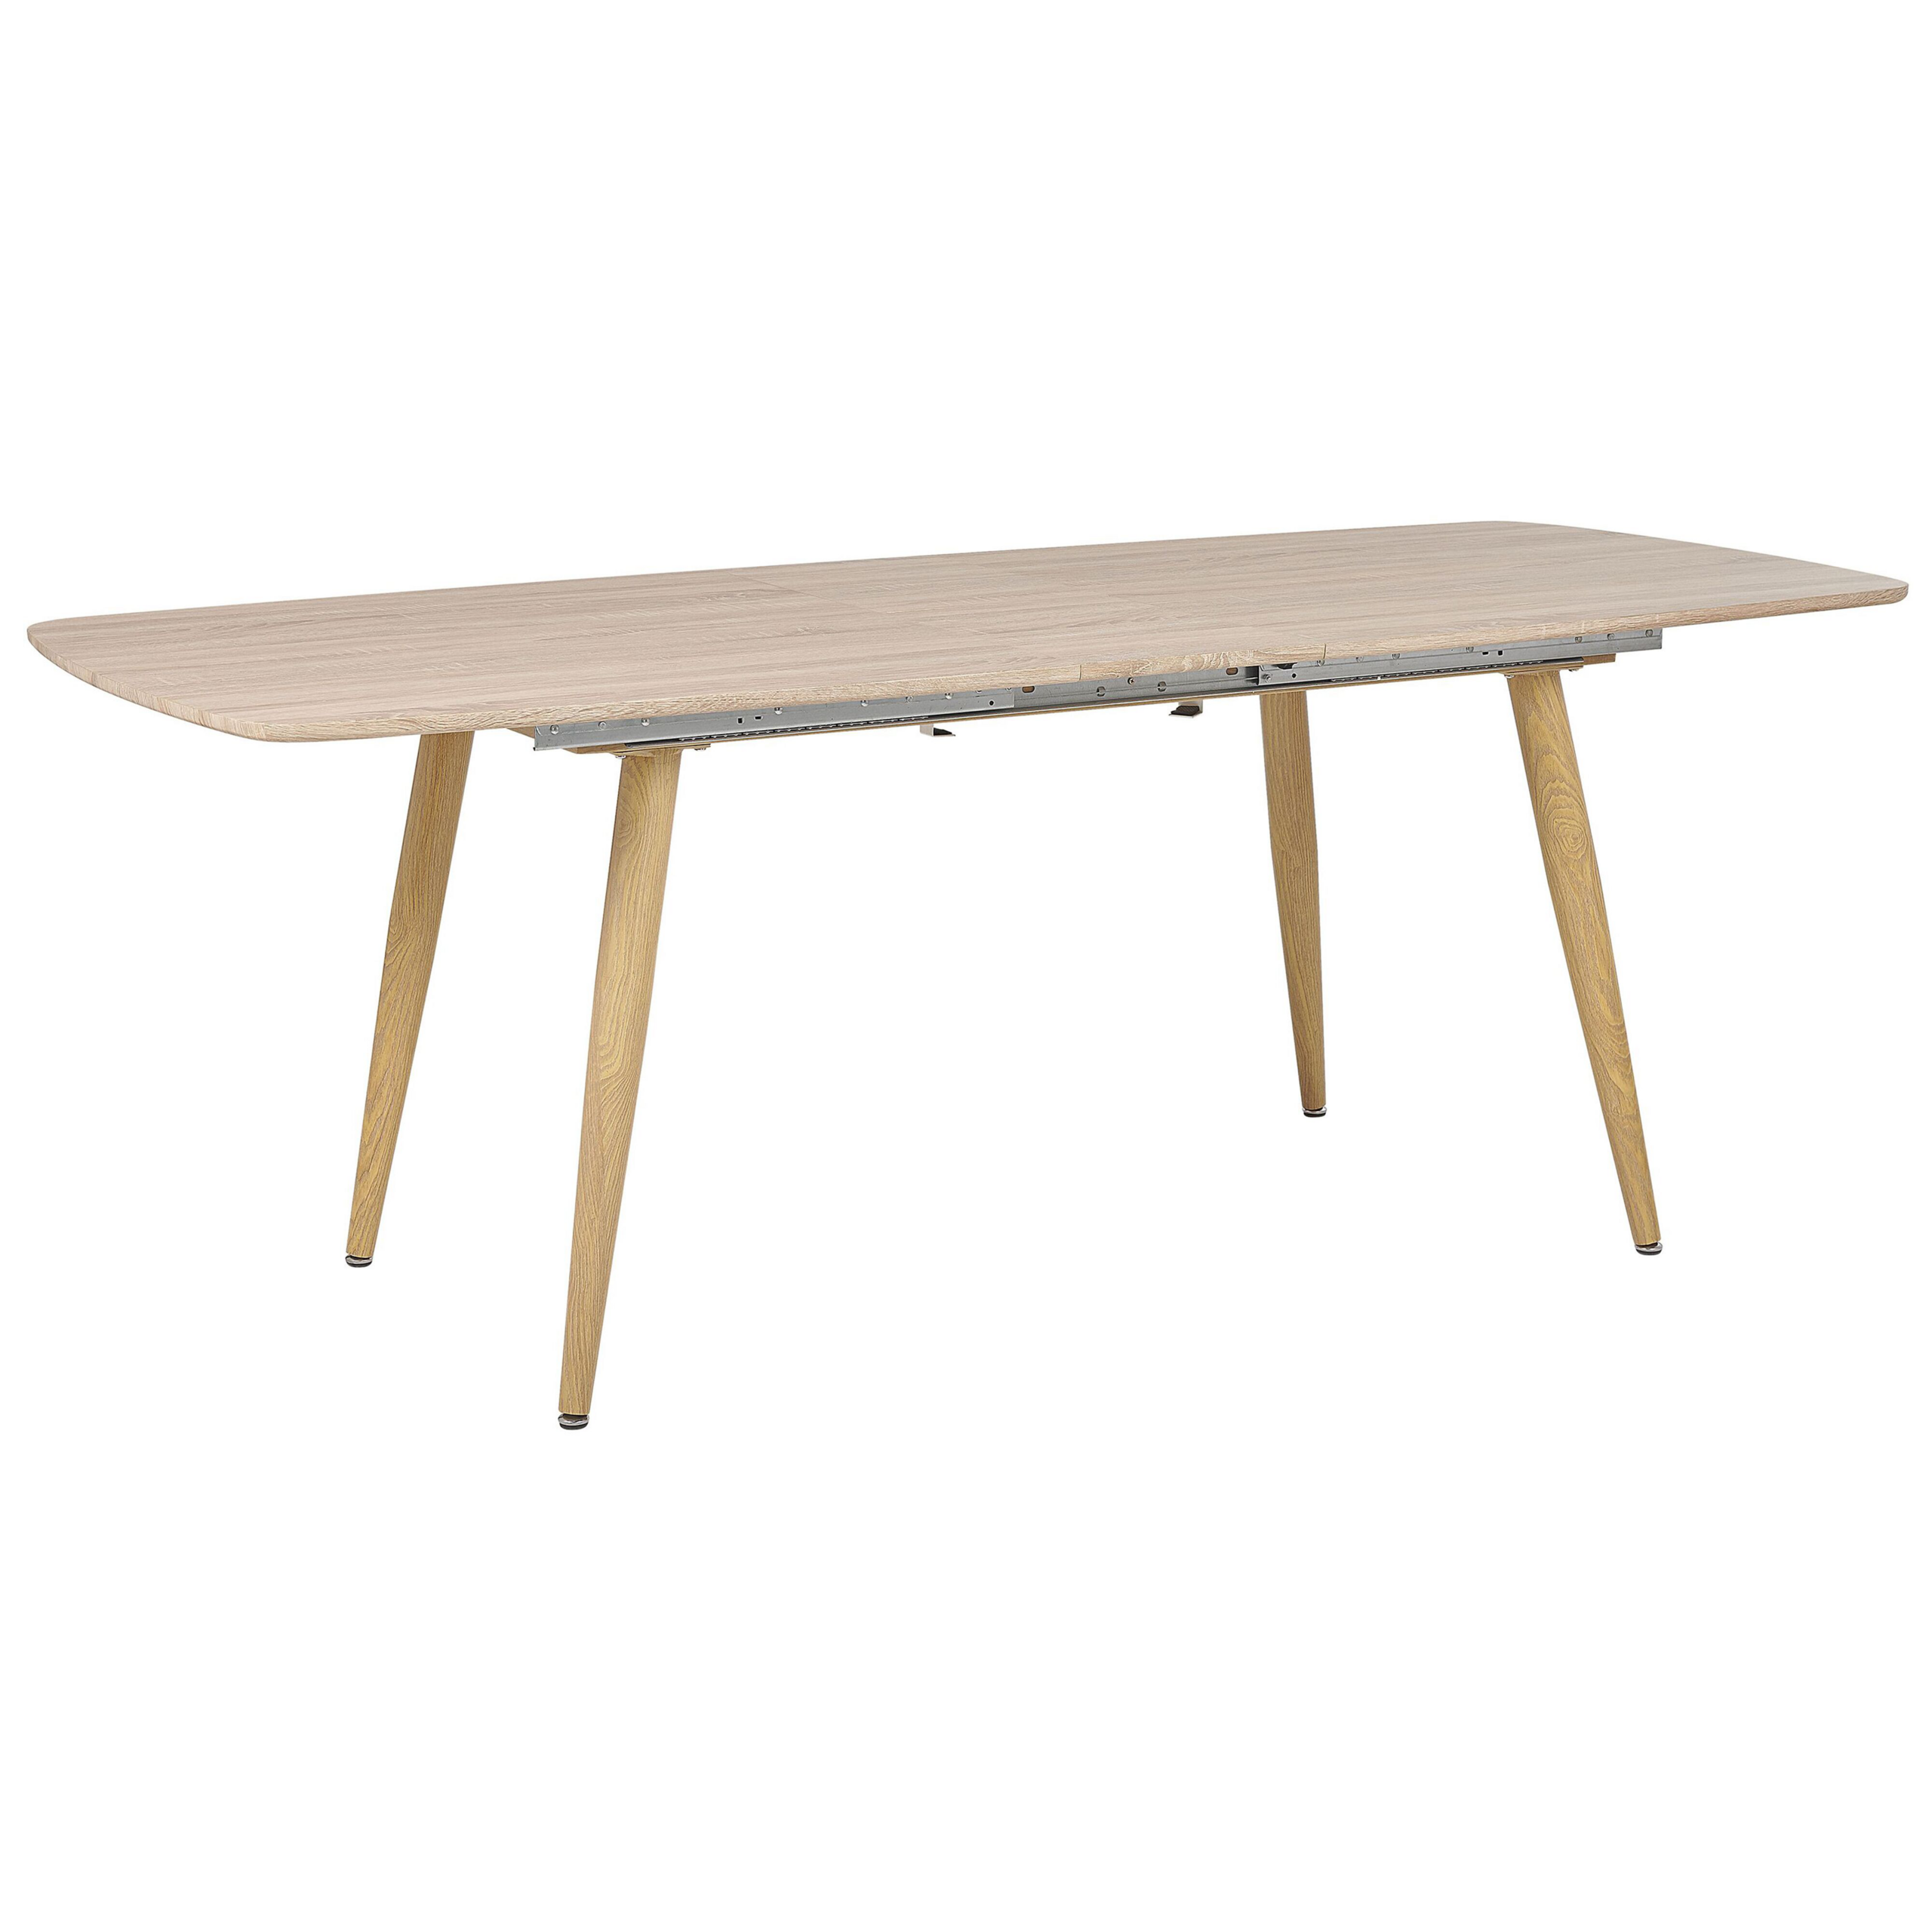 Beliani Dining Table Light Wood MDF Extendable Tabletop 180/210 x 90 cm 6 Seater Minimalist Table